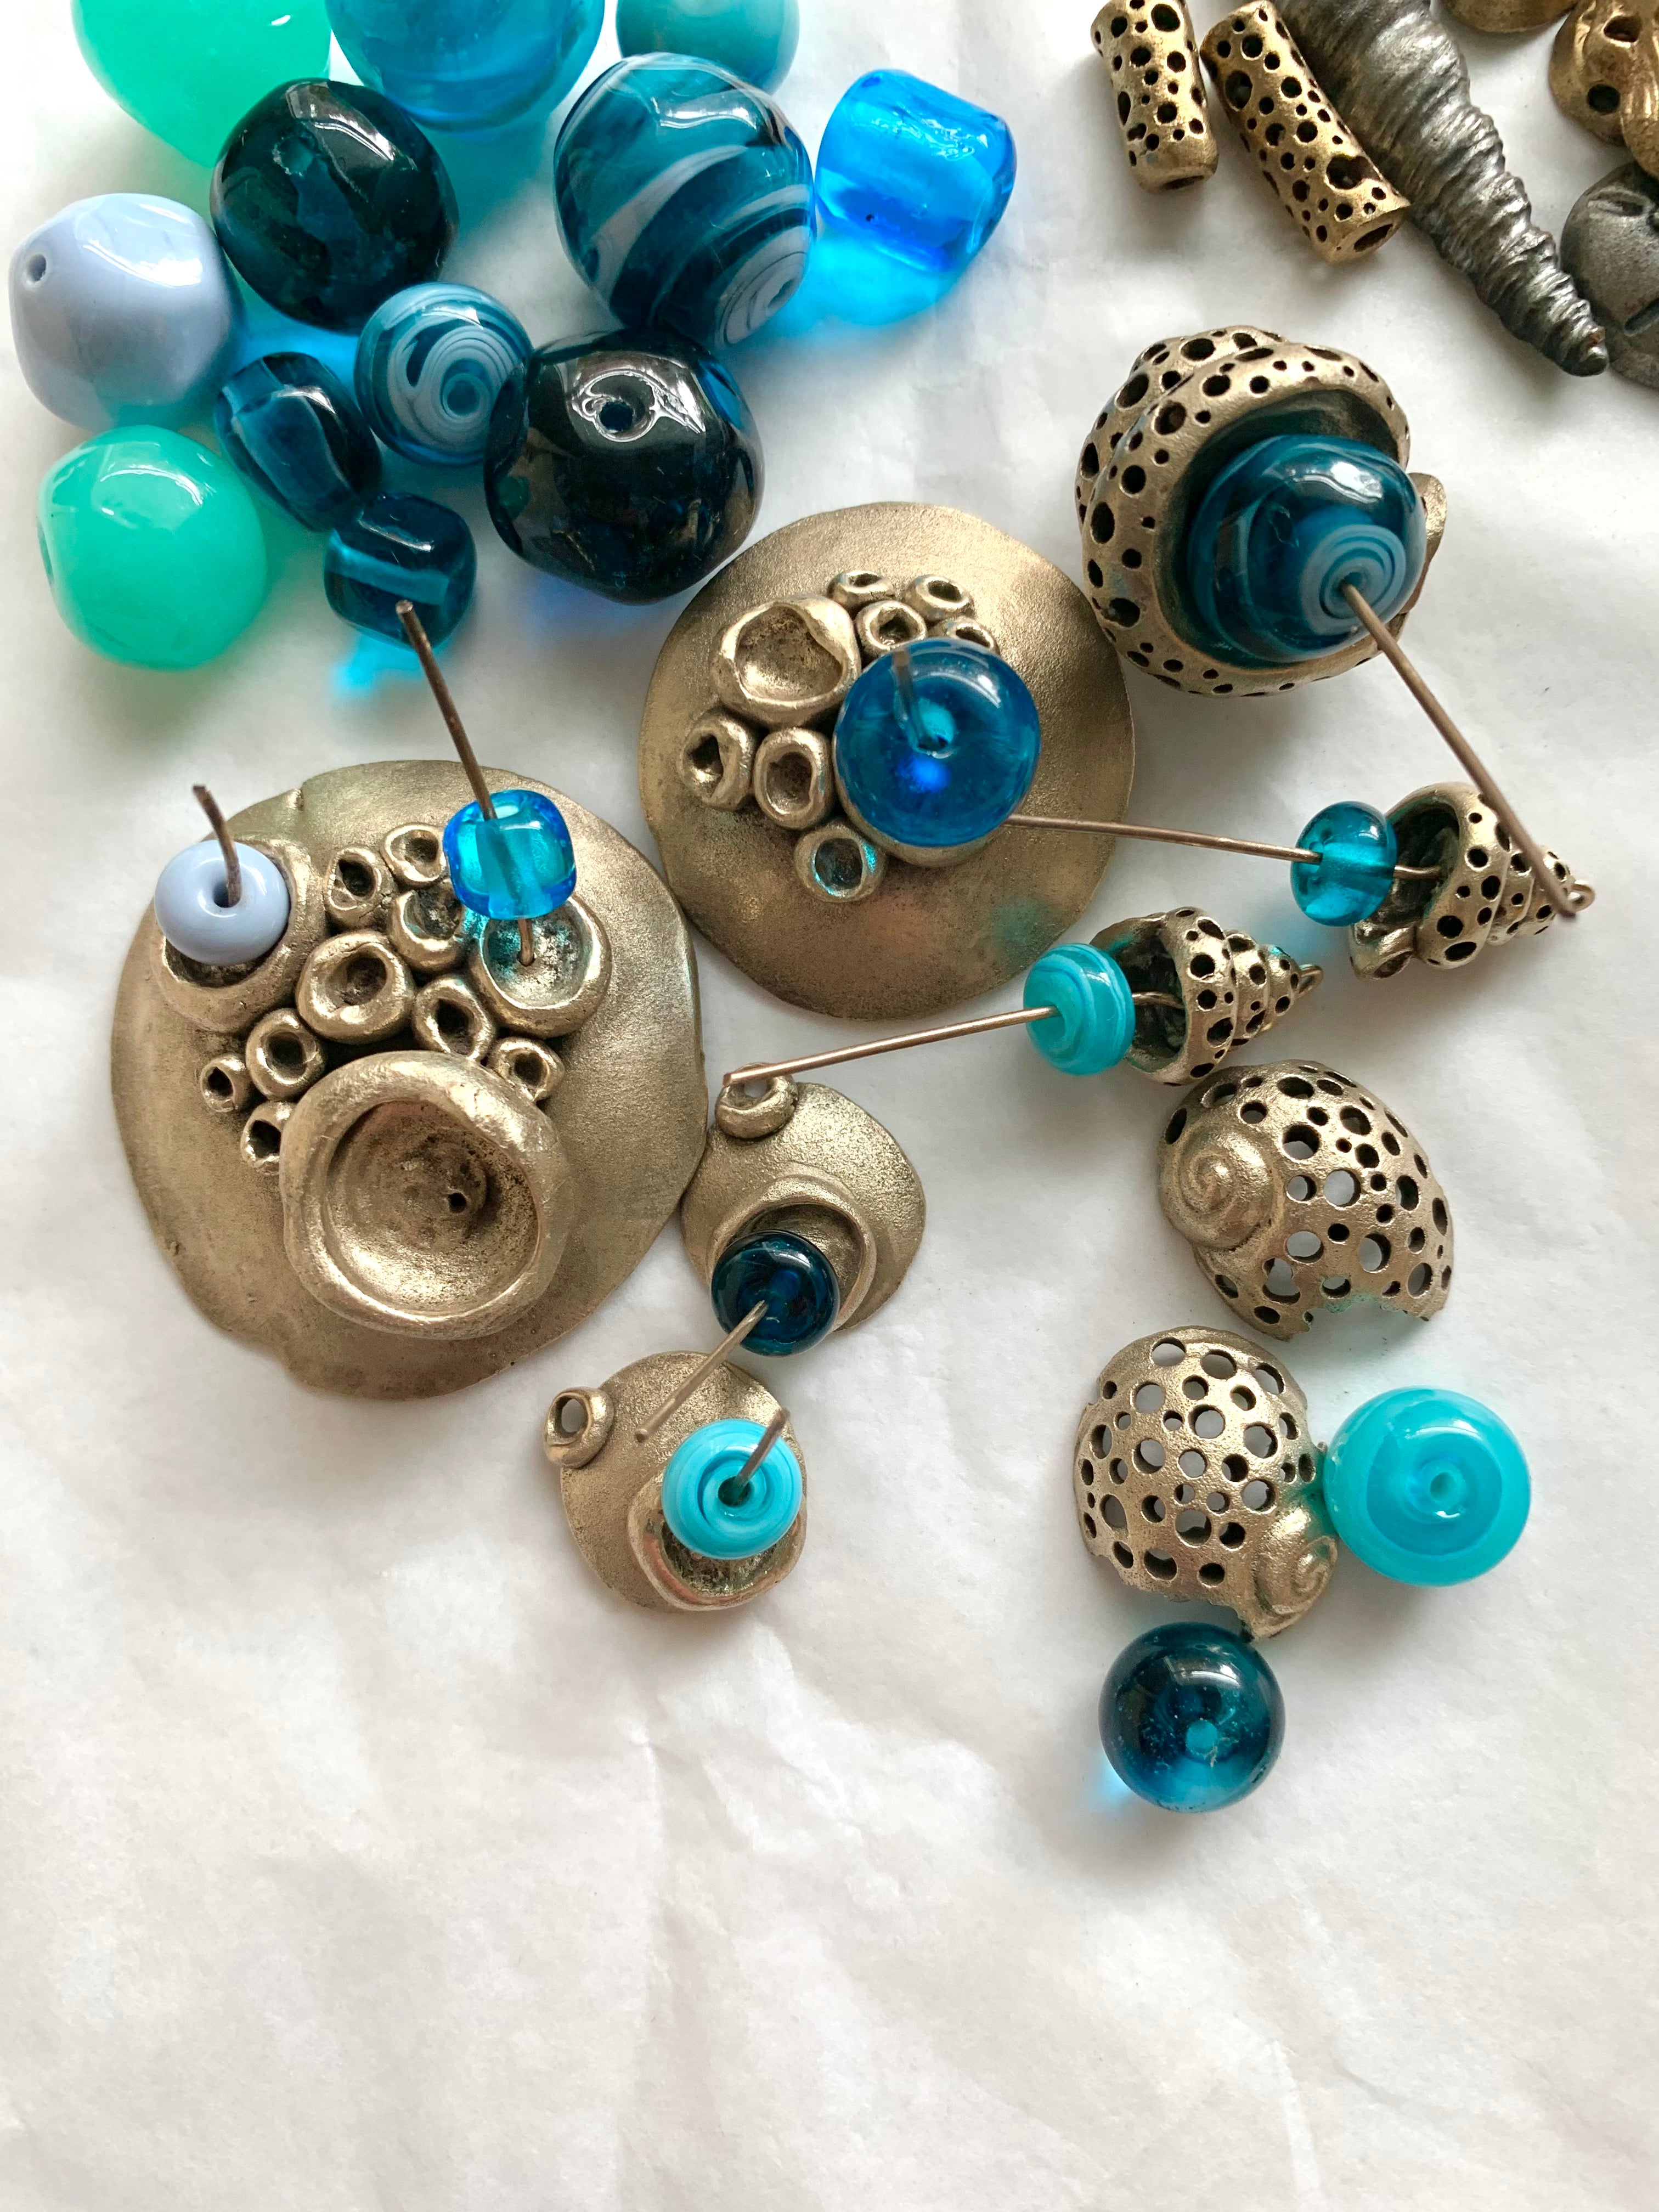 Bronze ocean inspired art jewelry with blue handmade glass beads